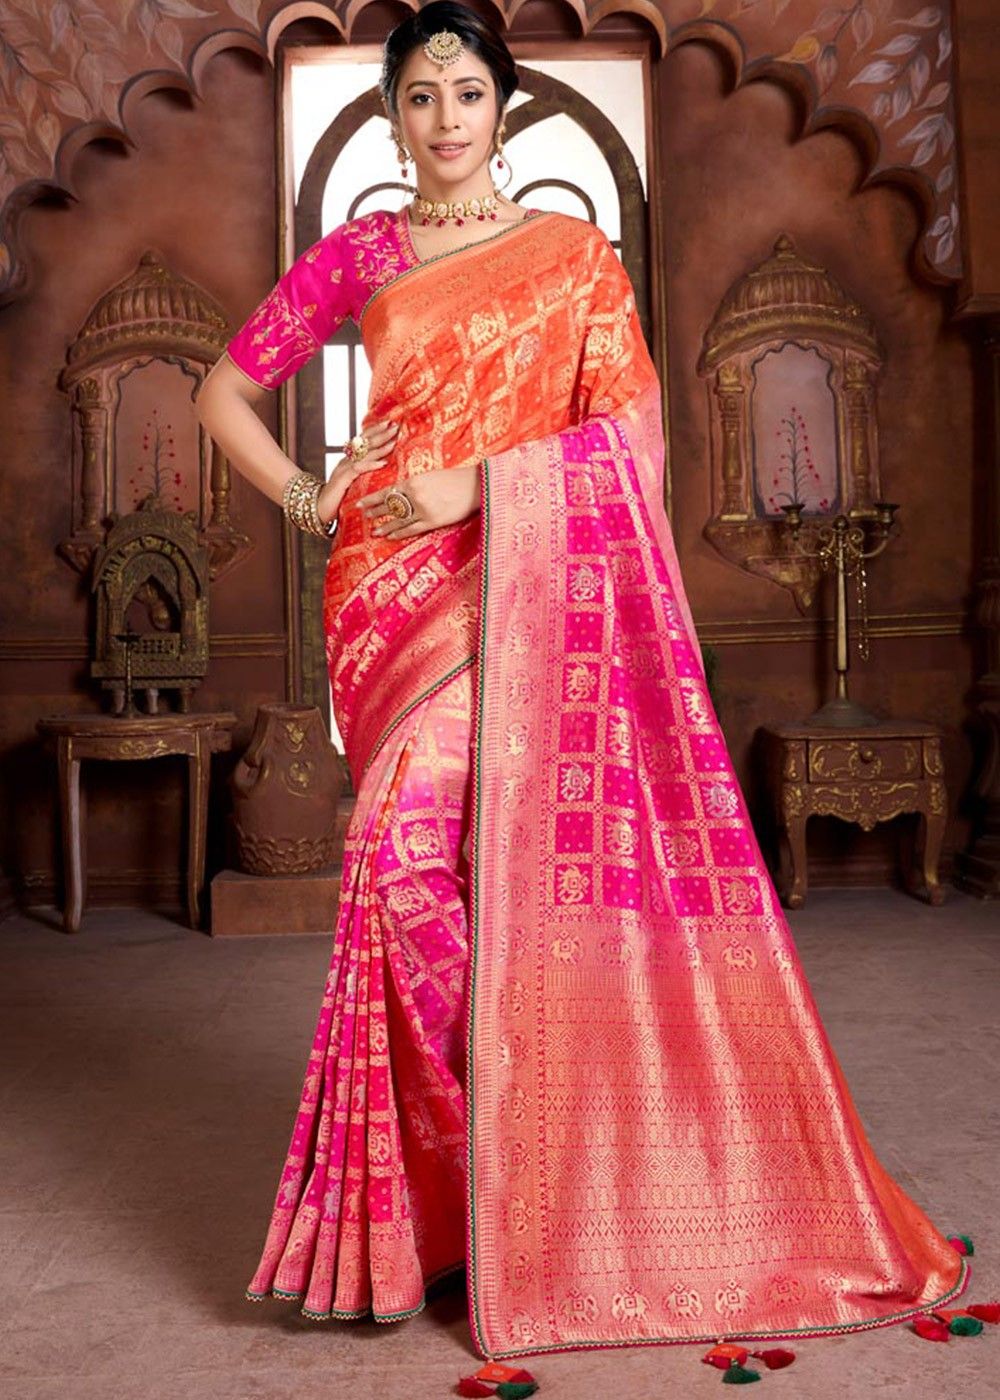 New Party Festival Sari Indian Wedding Wear Designer Ethnic Pakistani Pink  Saree | eBay